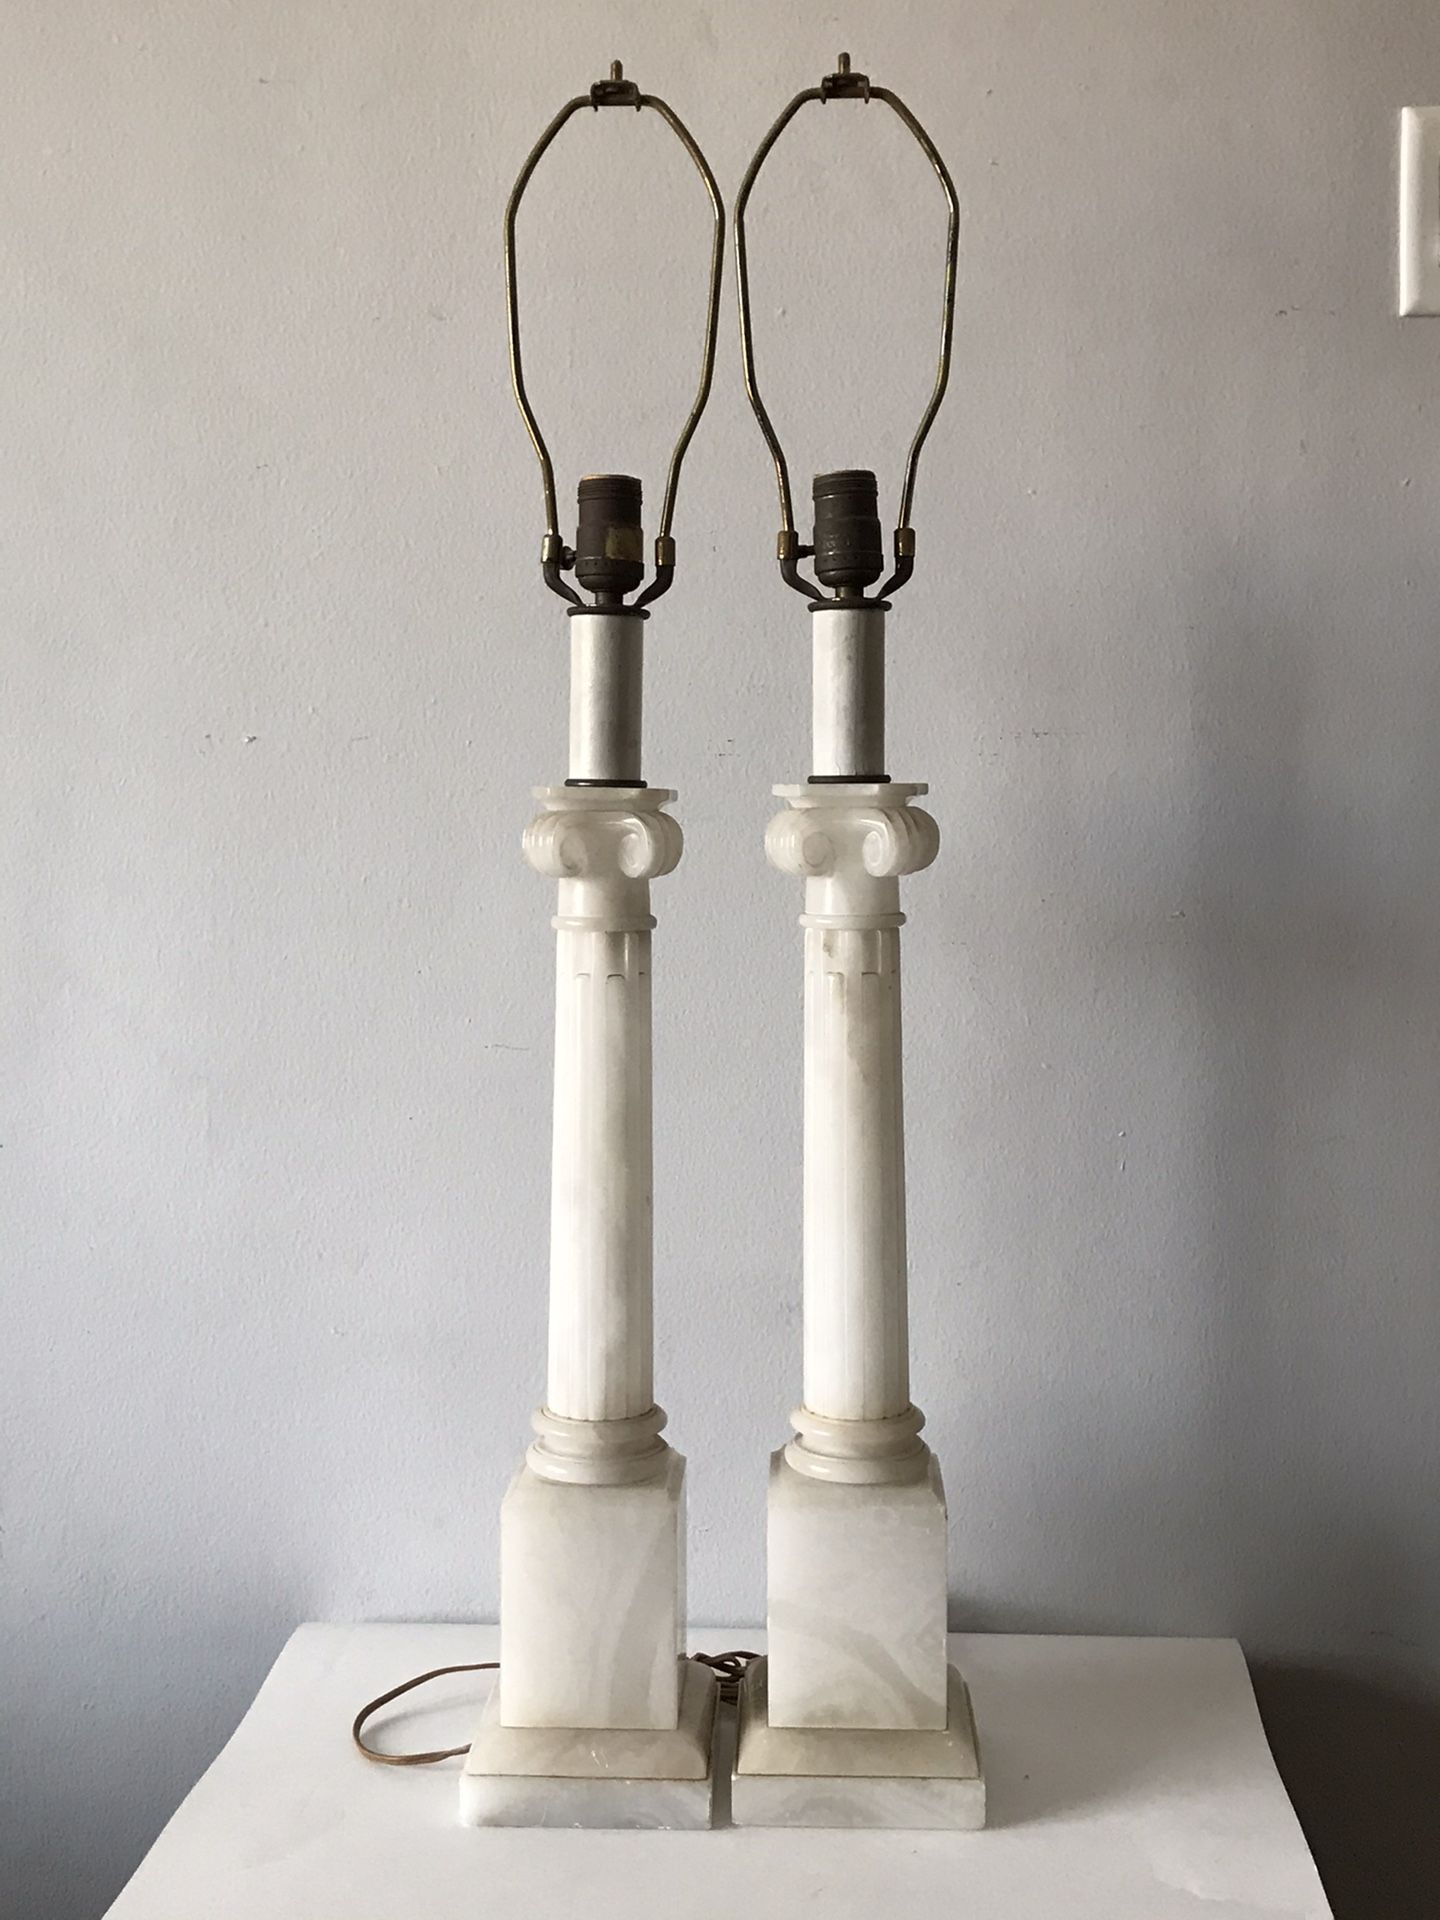 BEAUTIFUL ALABASTER MARBLE COLUMN LAMPS 1950 VINTAGE ITALIAN MODERN ART NOUVEAU